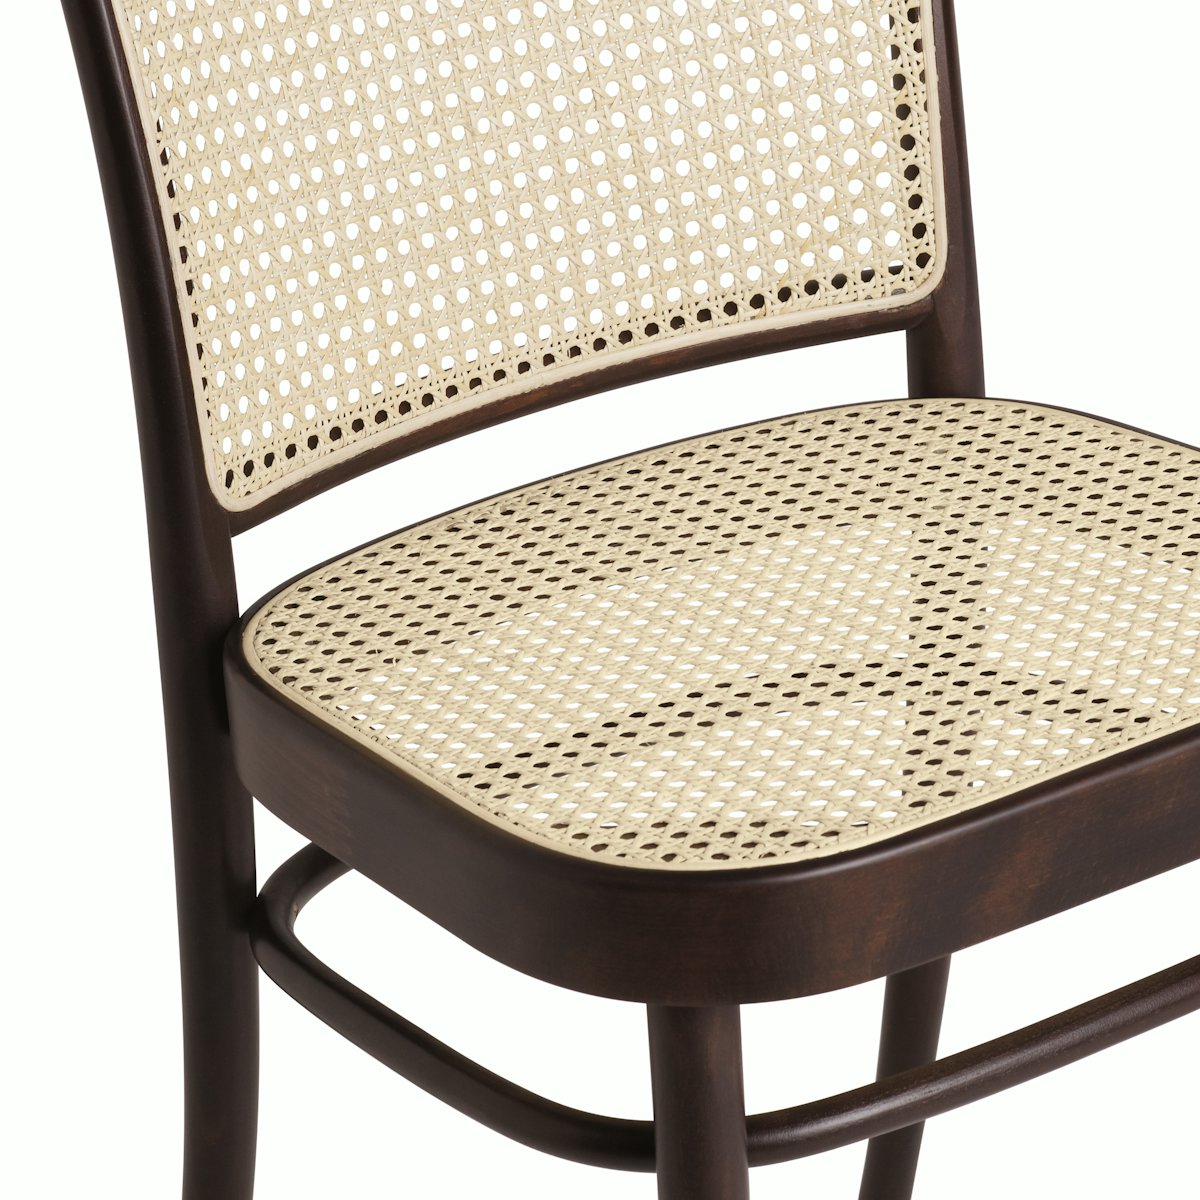 Hoffmann Dining Chair